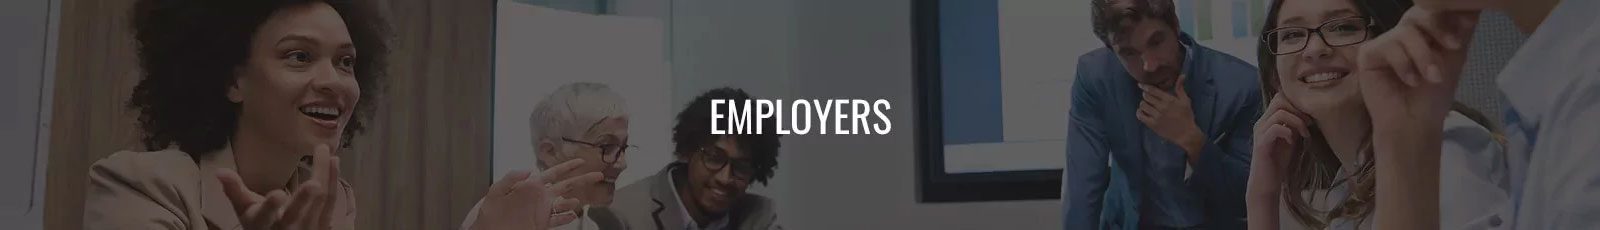 Employers Smiling